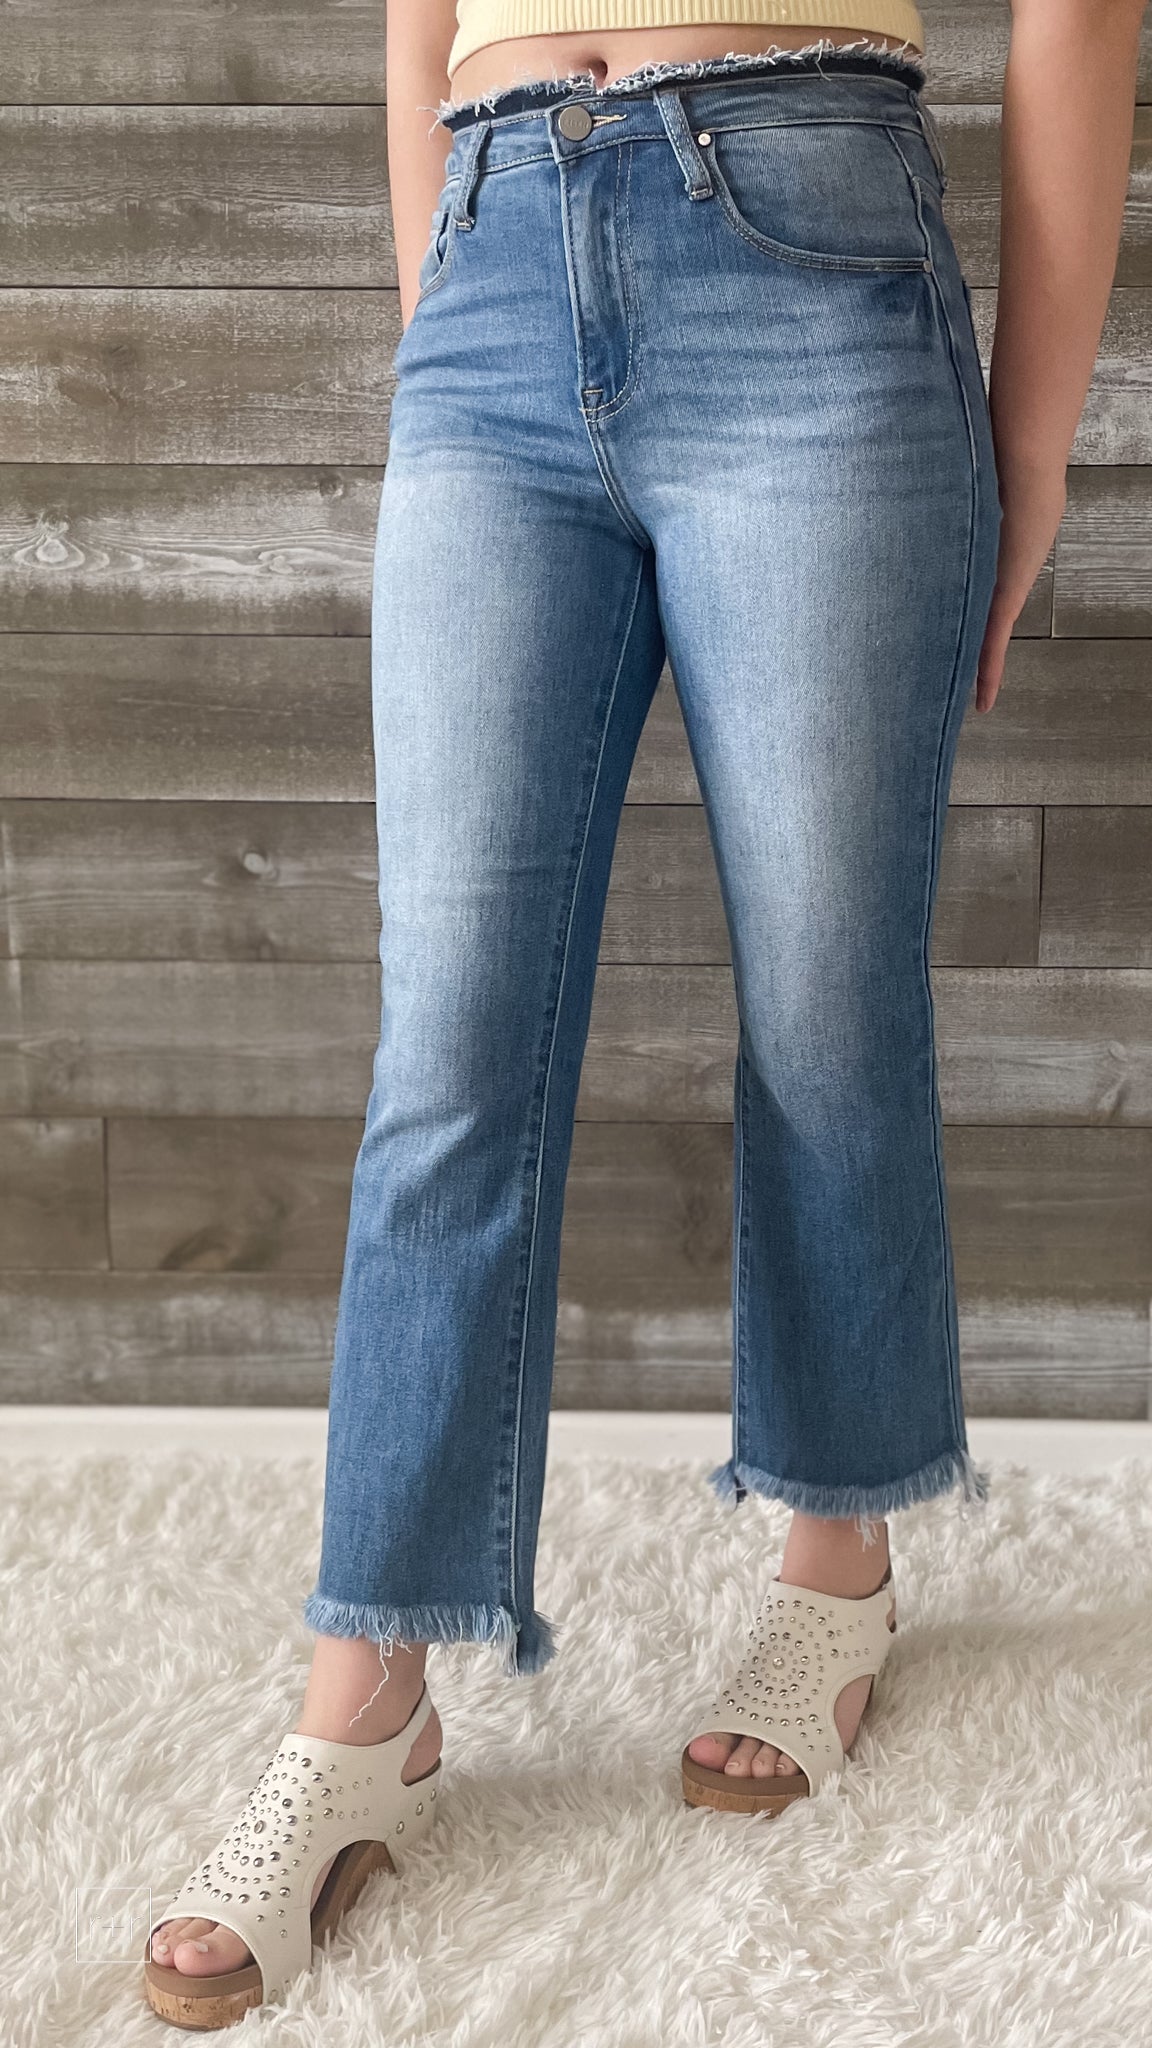 High-Waisted Frayed Jeans